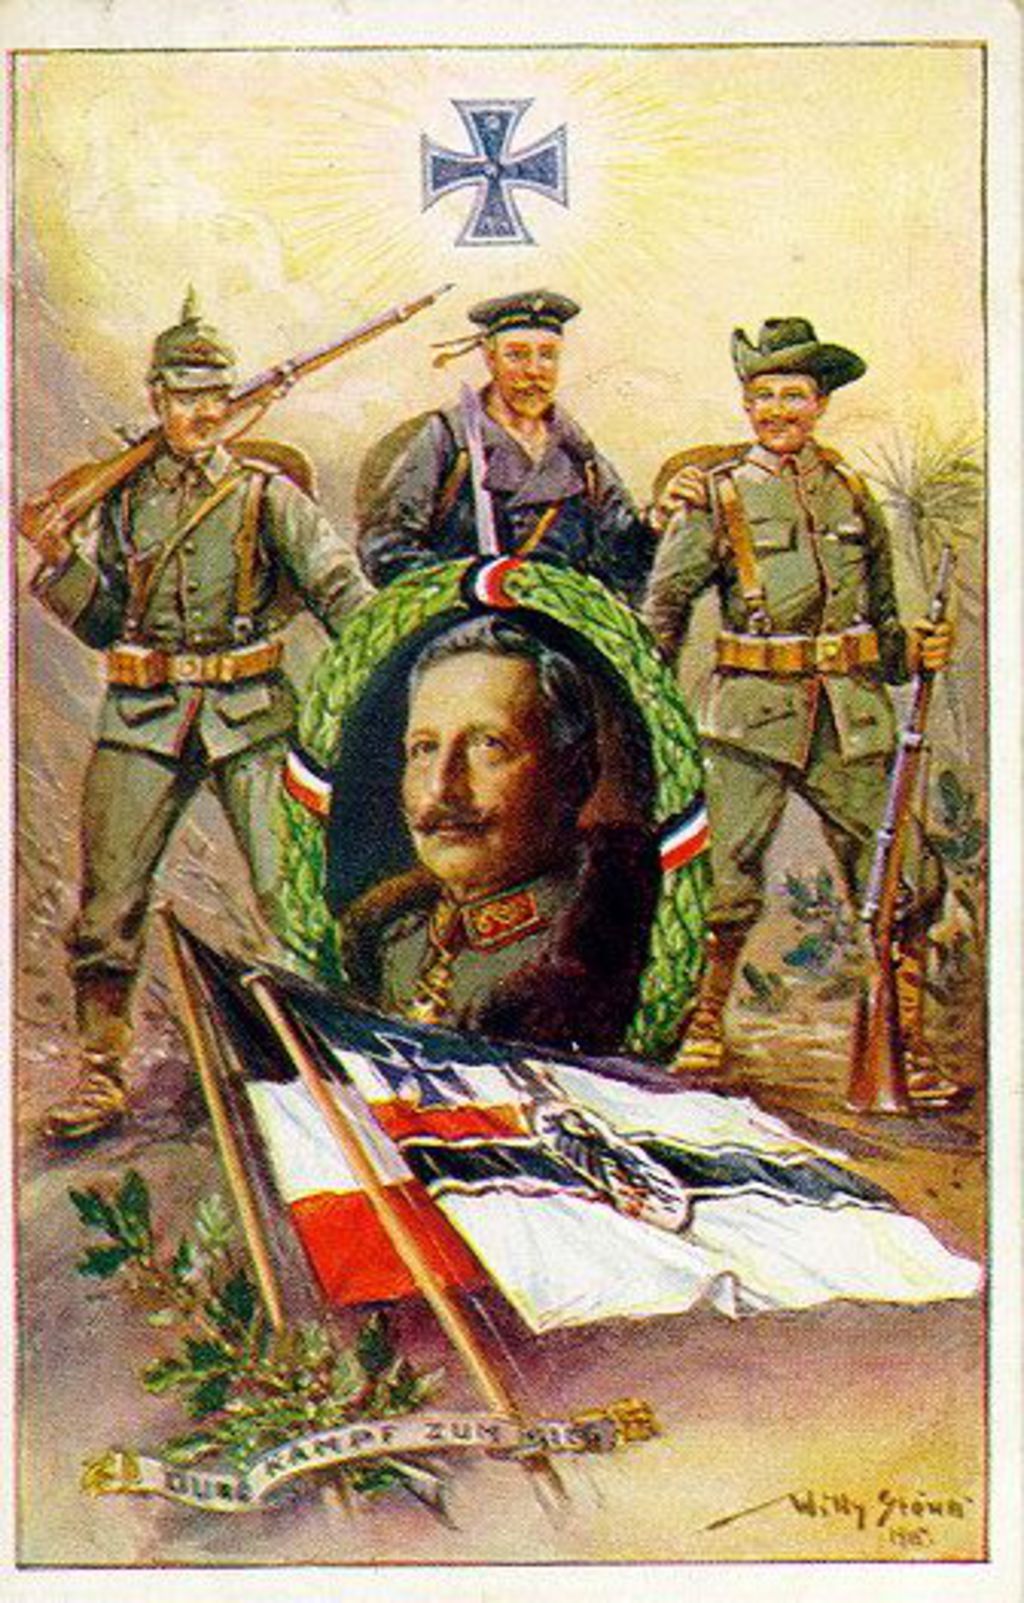 Exponat: Postkarte: "Durch Kampf zum Sieg", 1914